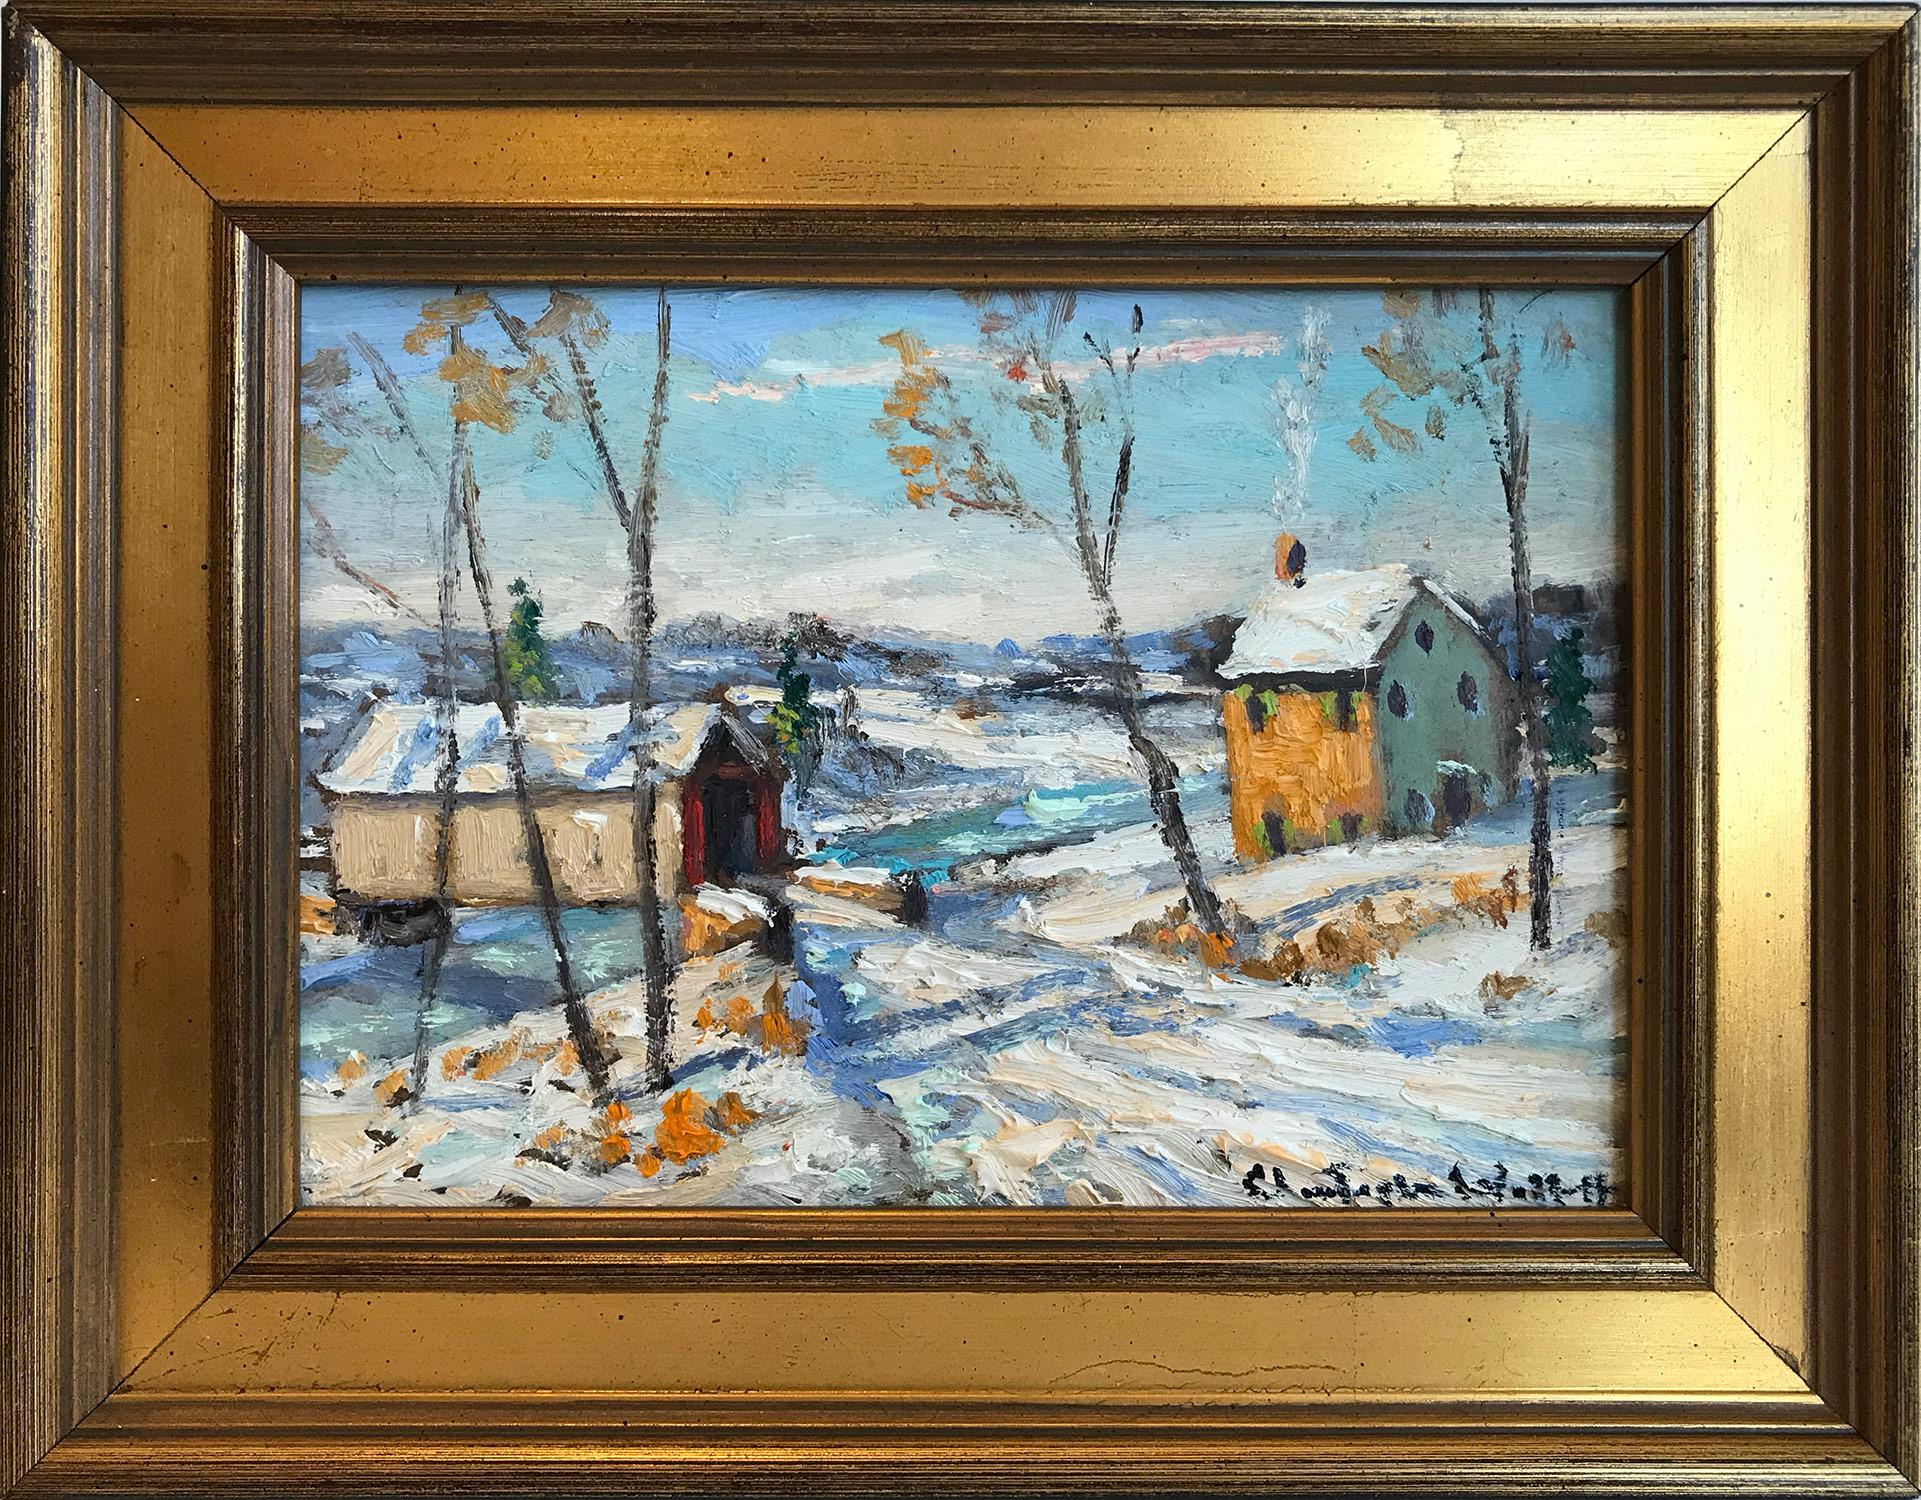 Christopher Willett Landscape Painting - "Upper Bucks Pa" Bucks County Pastoral Winter Snow Scene Landscape Oil Painting